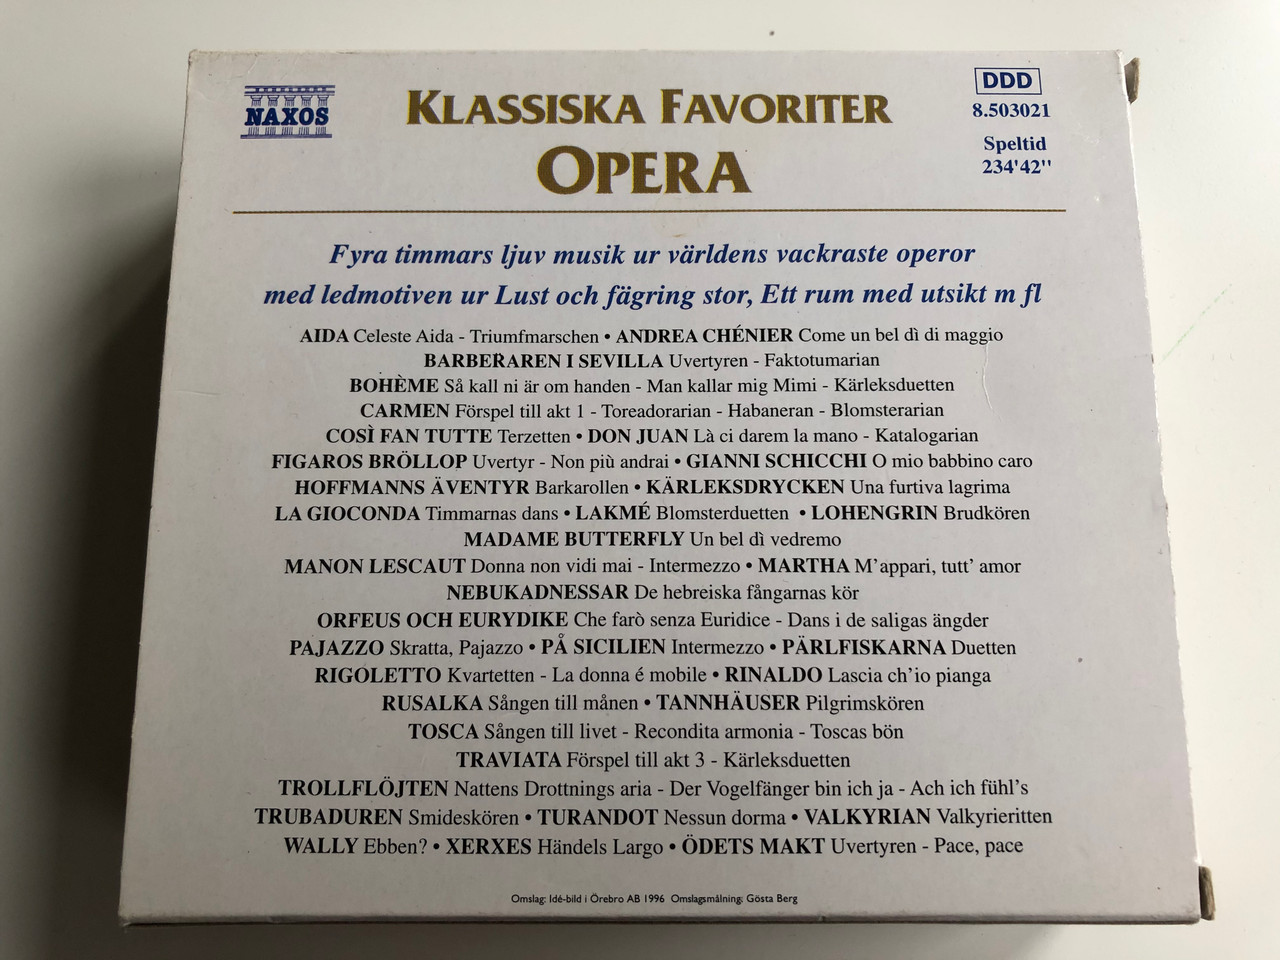 Klassiska Favoriter - Opera / 4 timmar ljuv musik ur Carmen, Trollflojten,  Rigoletto, m fl / Naxos ‎3x Audio CD / 8.503021 - bibleinmylanguage